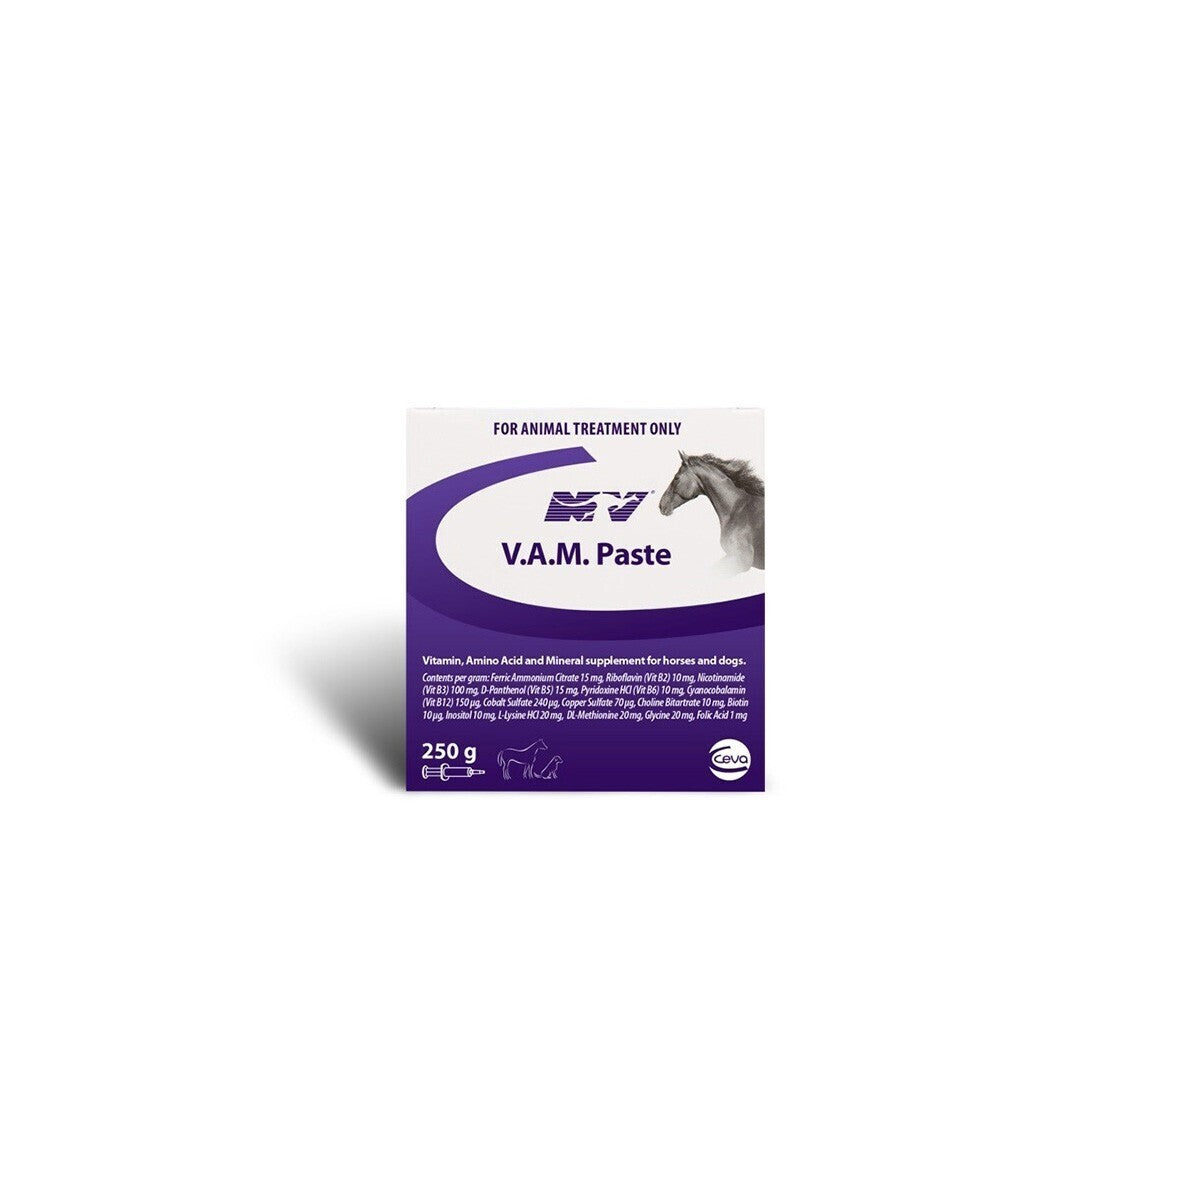 Ceva V.A.M. Paste 250g. Vitamin, Amino Acid & Mineral Supplement For Horses & Dogs